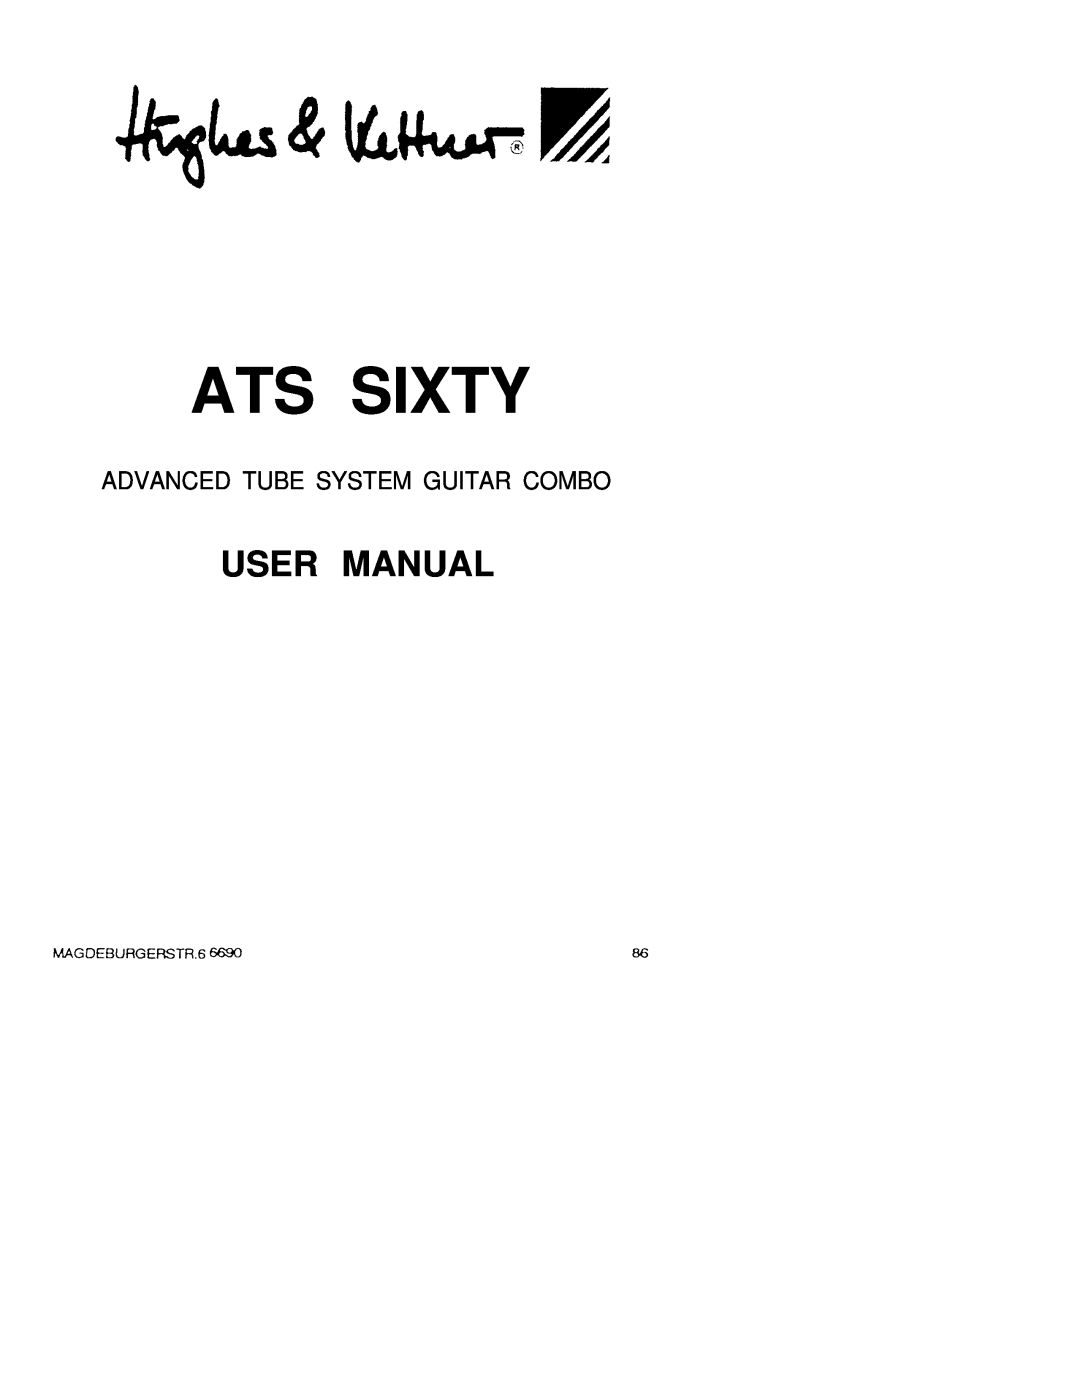 Hughes & Kettner ATS SIXTY user manual Ats Sixty, Advanced Tube System Guitar Combo 